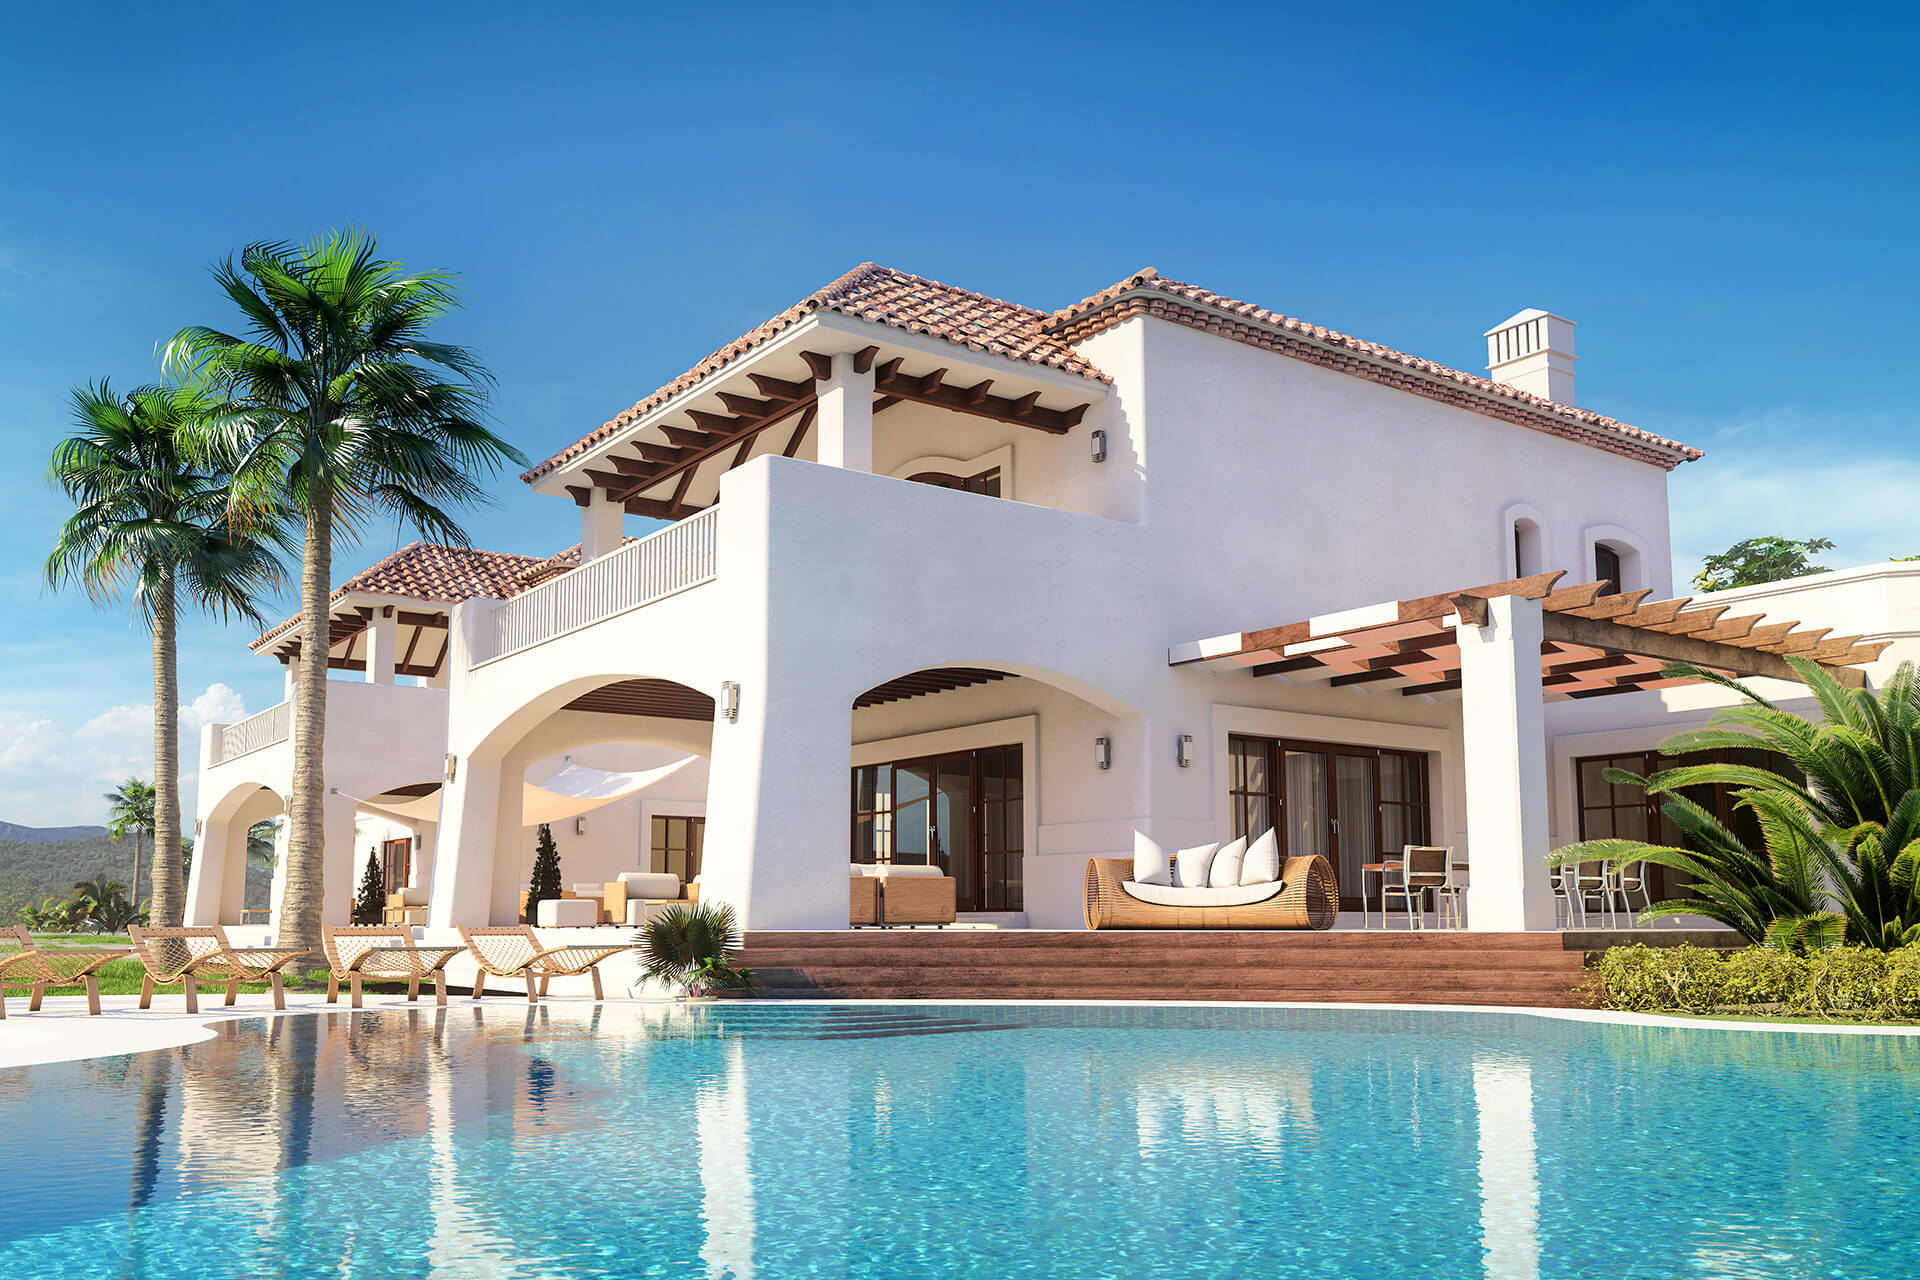 Aruba Real Estate